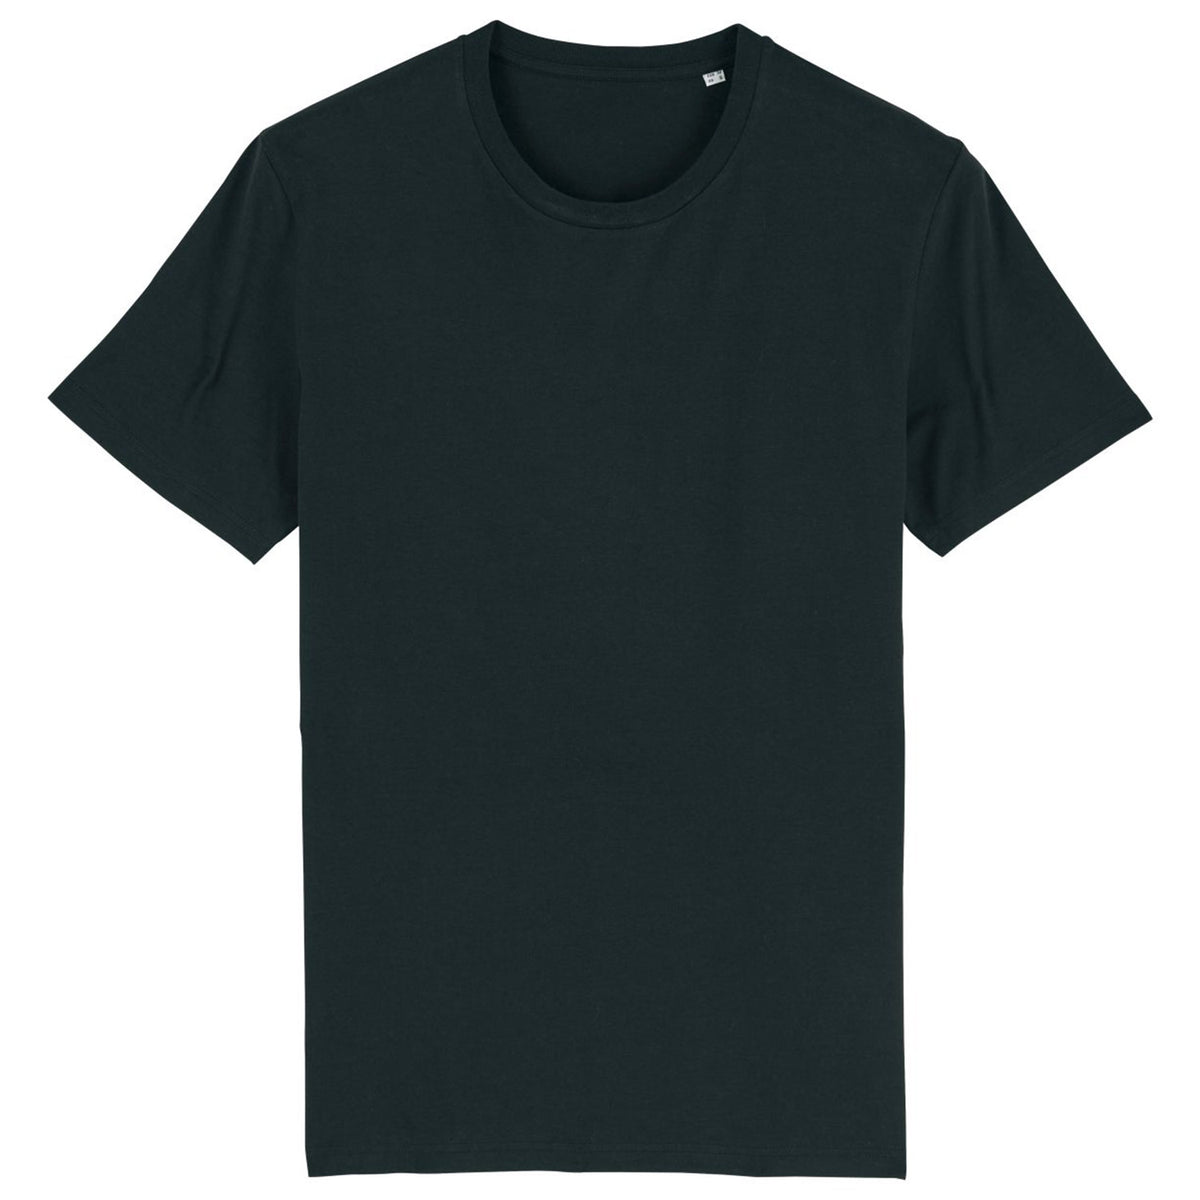 Capital XTRA Black Unisex T-Shirt